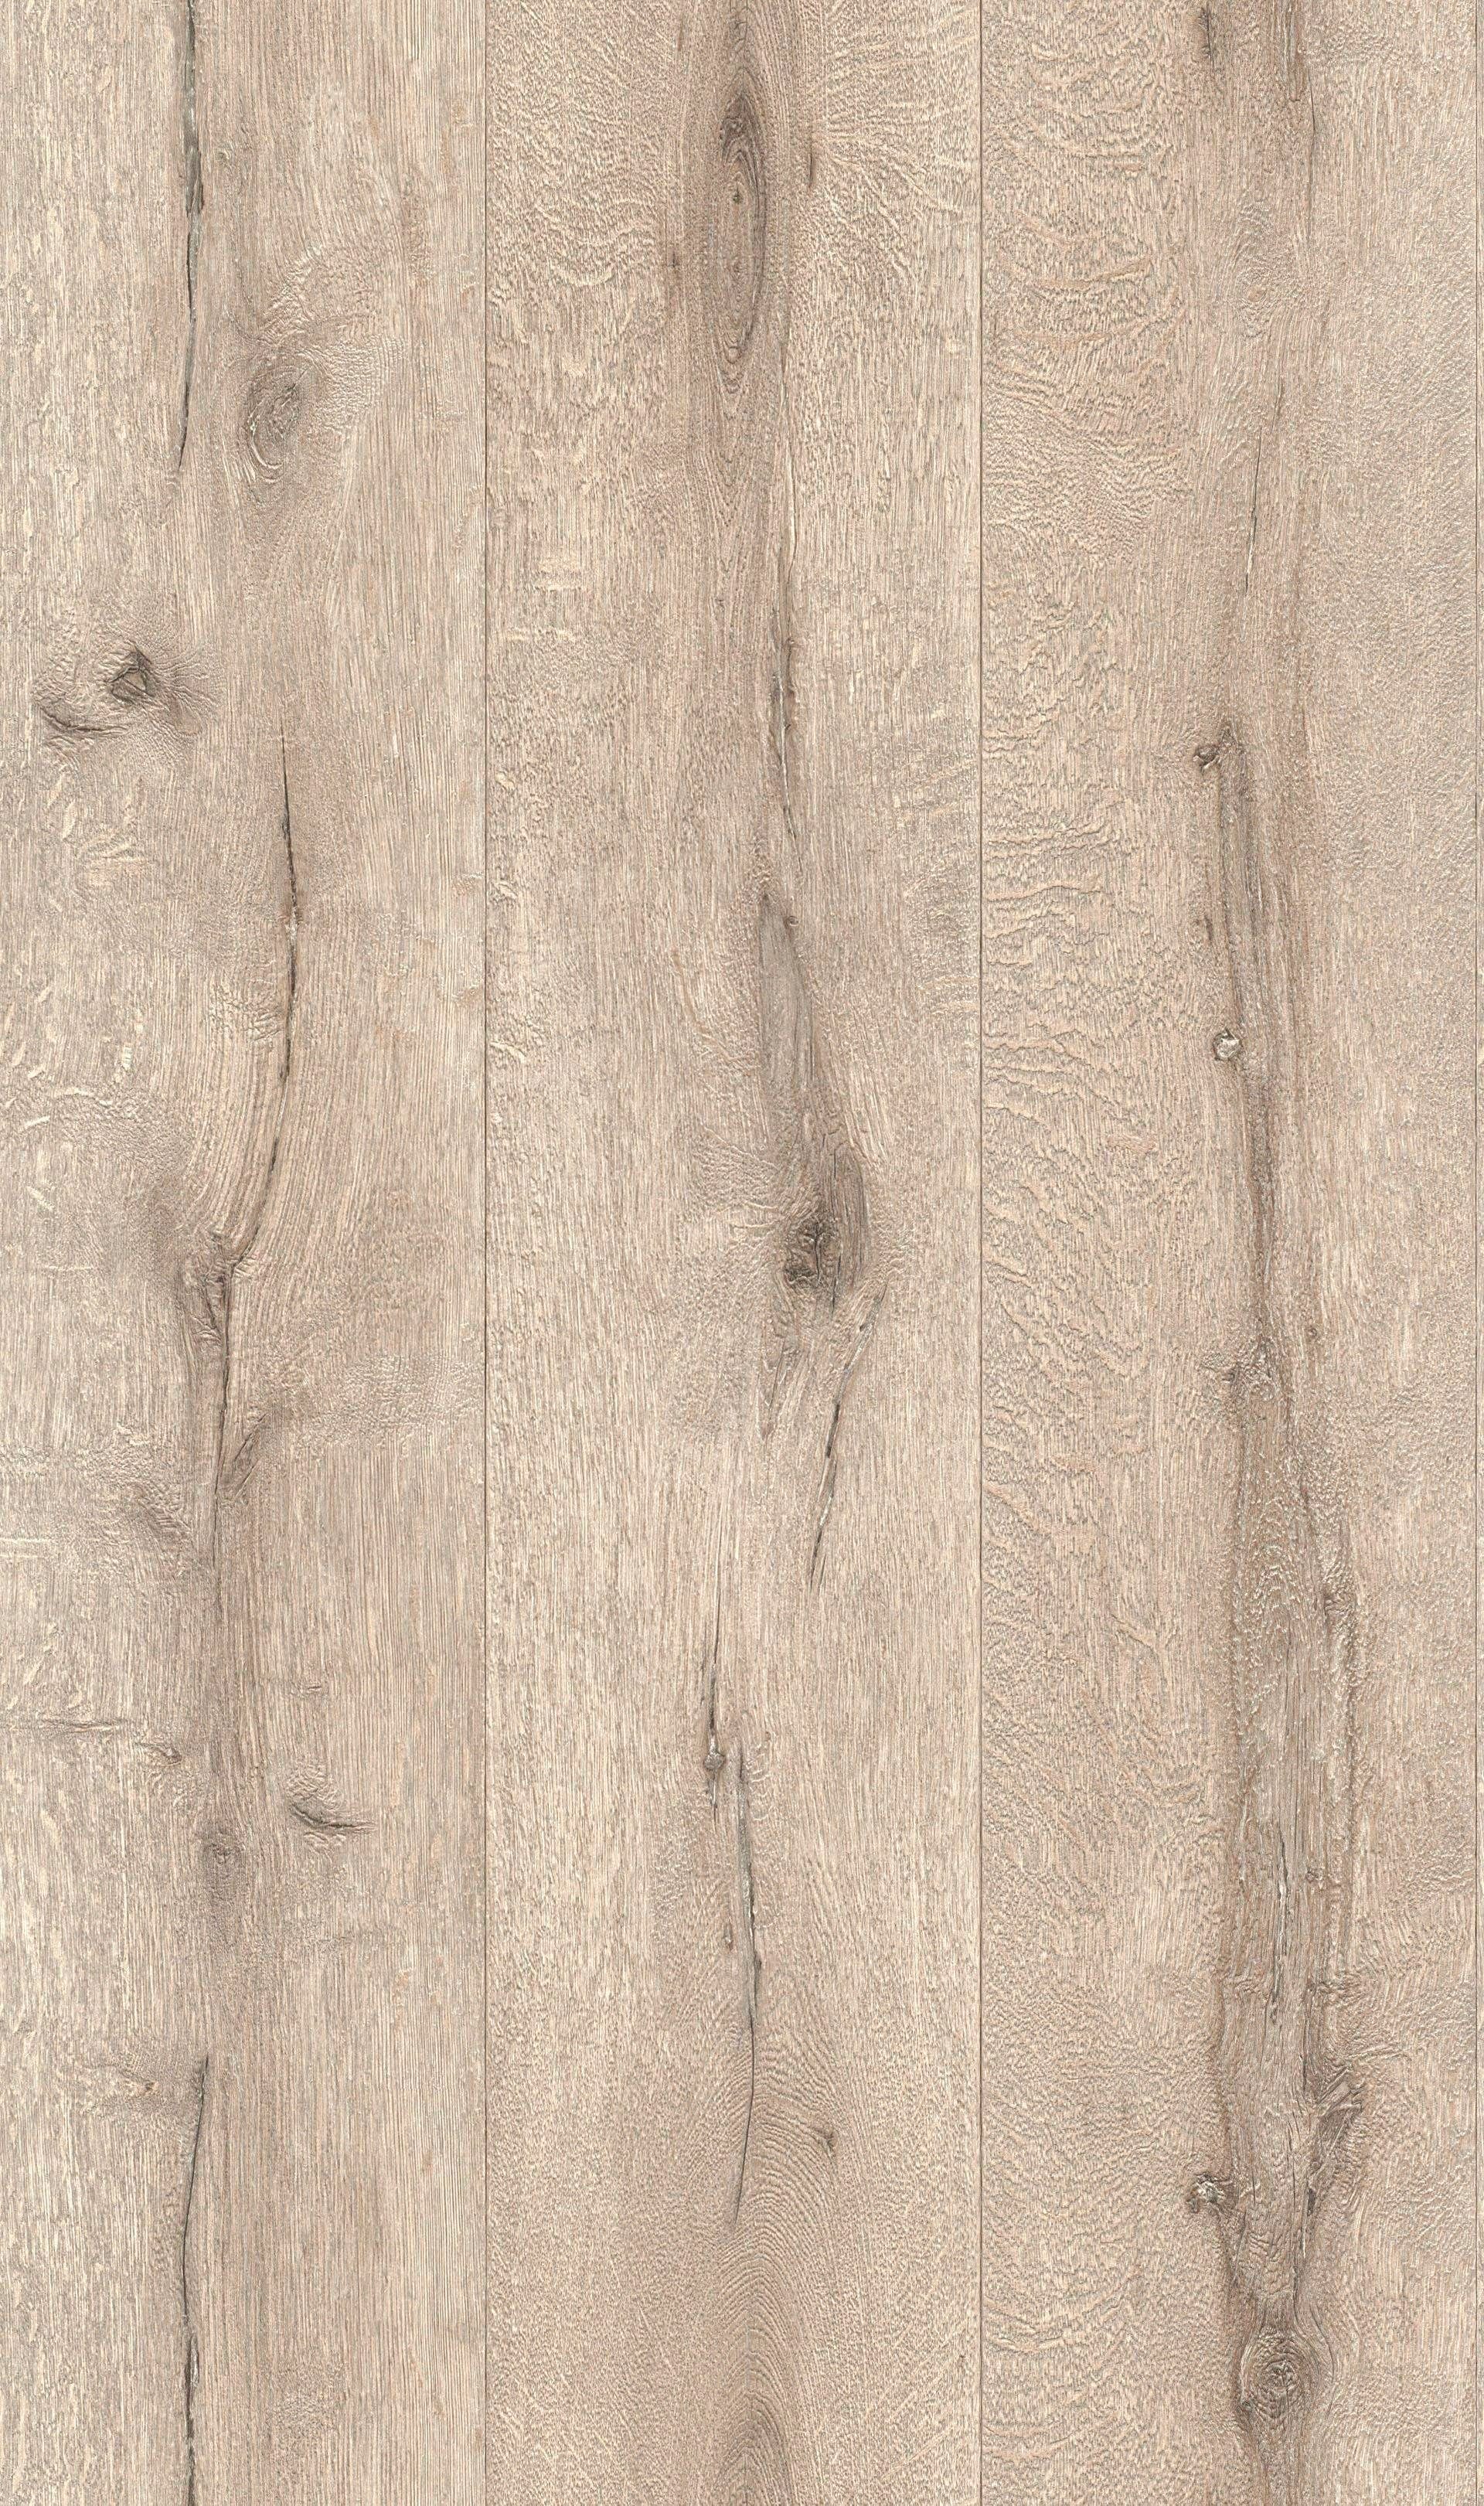 gemustert, III, (1 geprägt, Holz, Rasch Vinyltapete St) Factory grau/braun